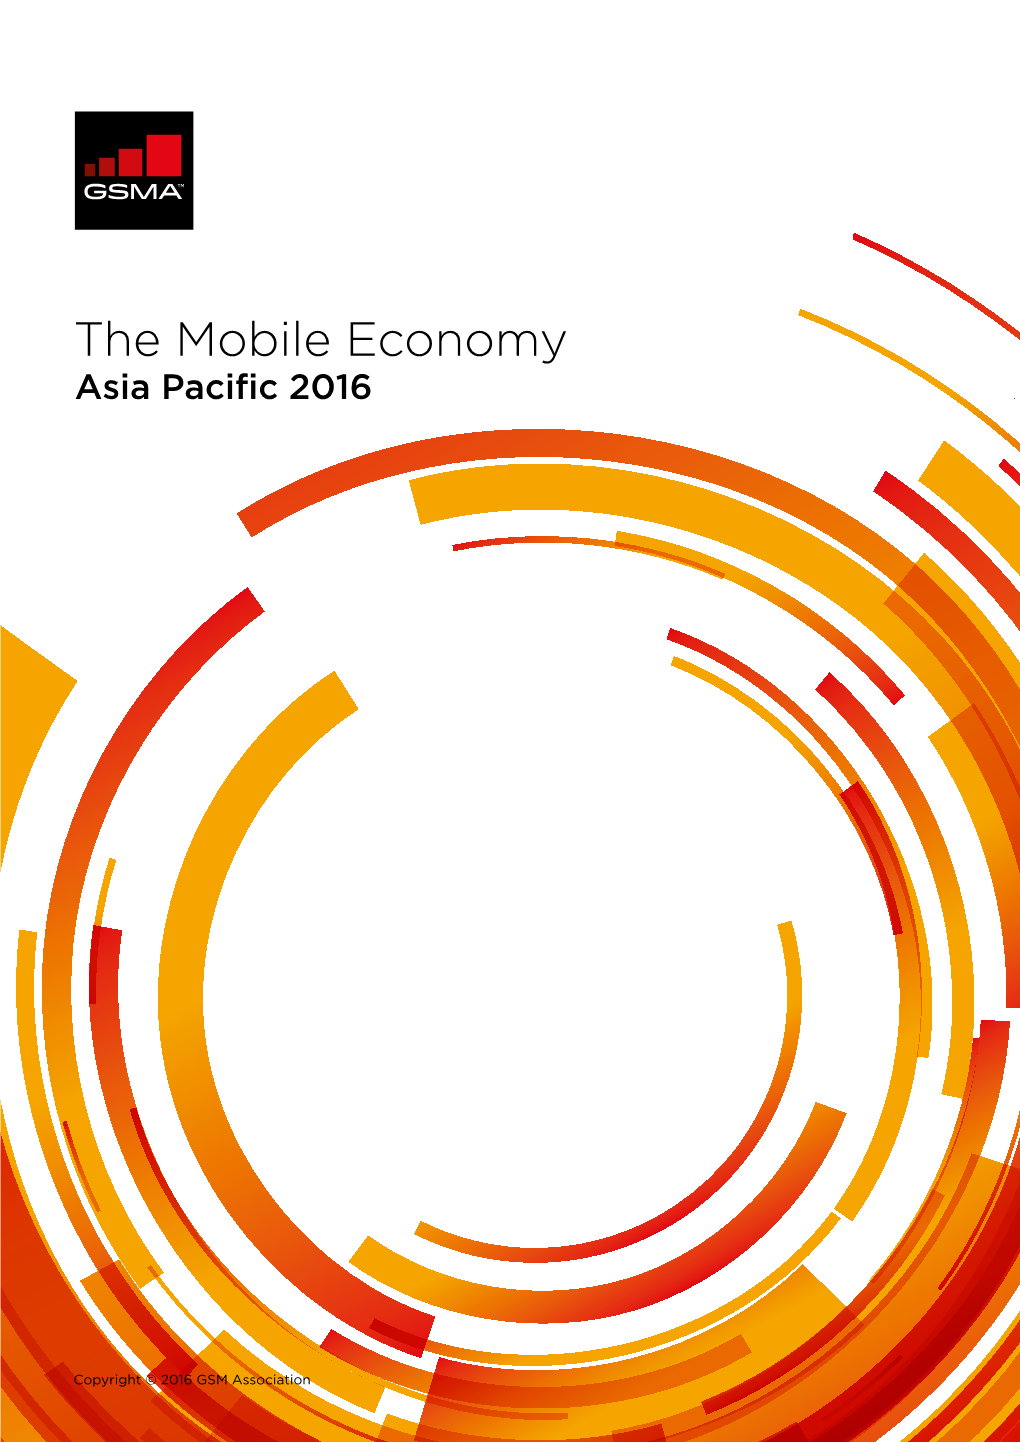 The Mobile Economy Asia Pacific 2016